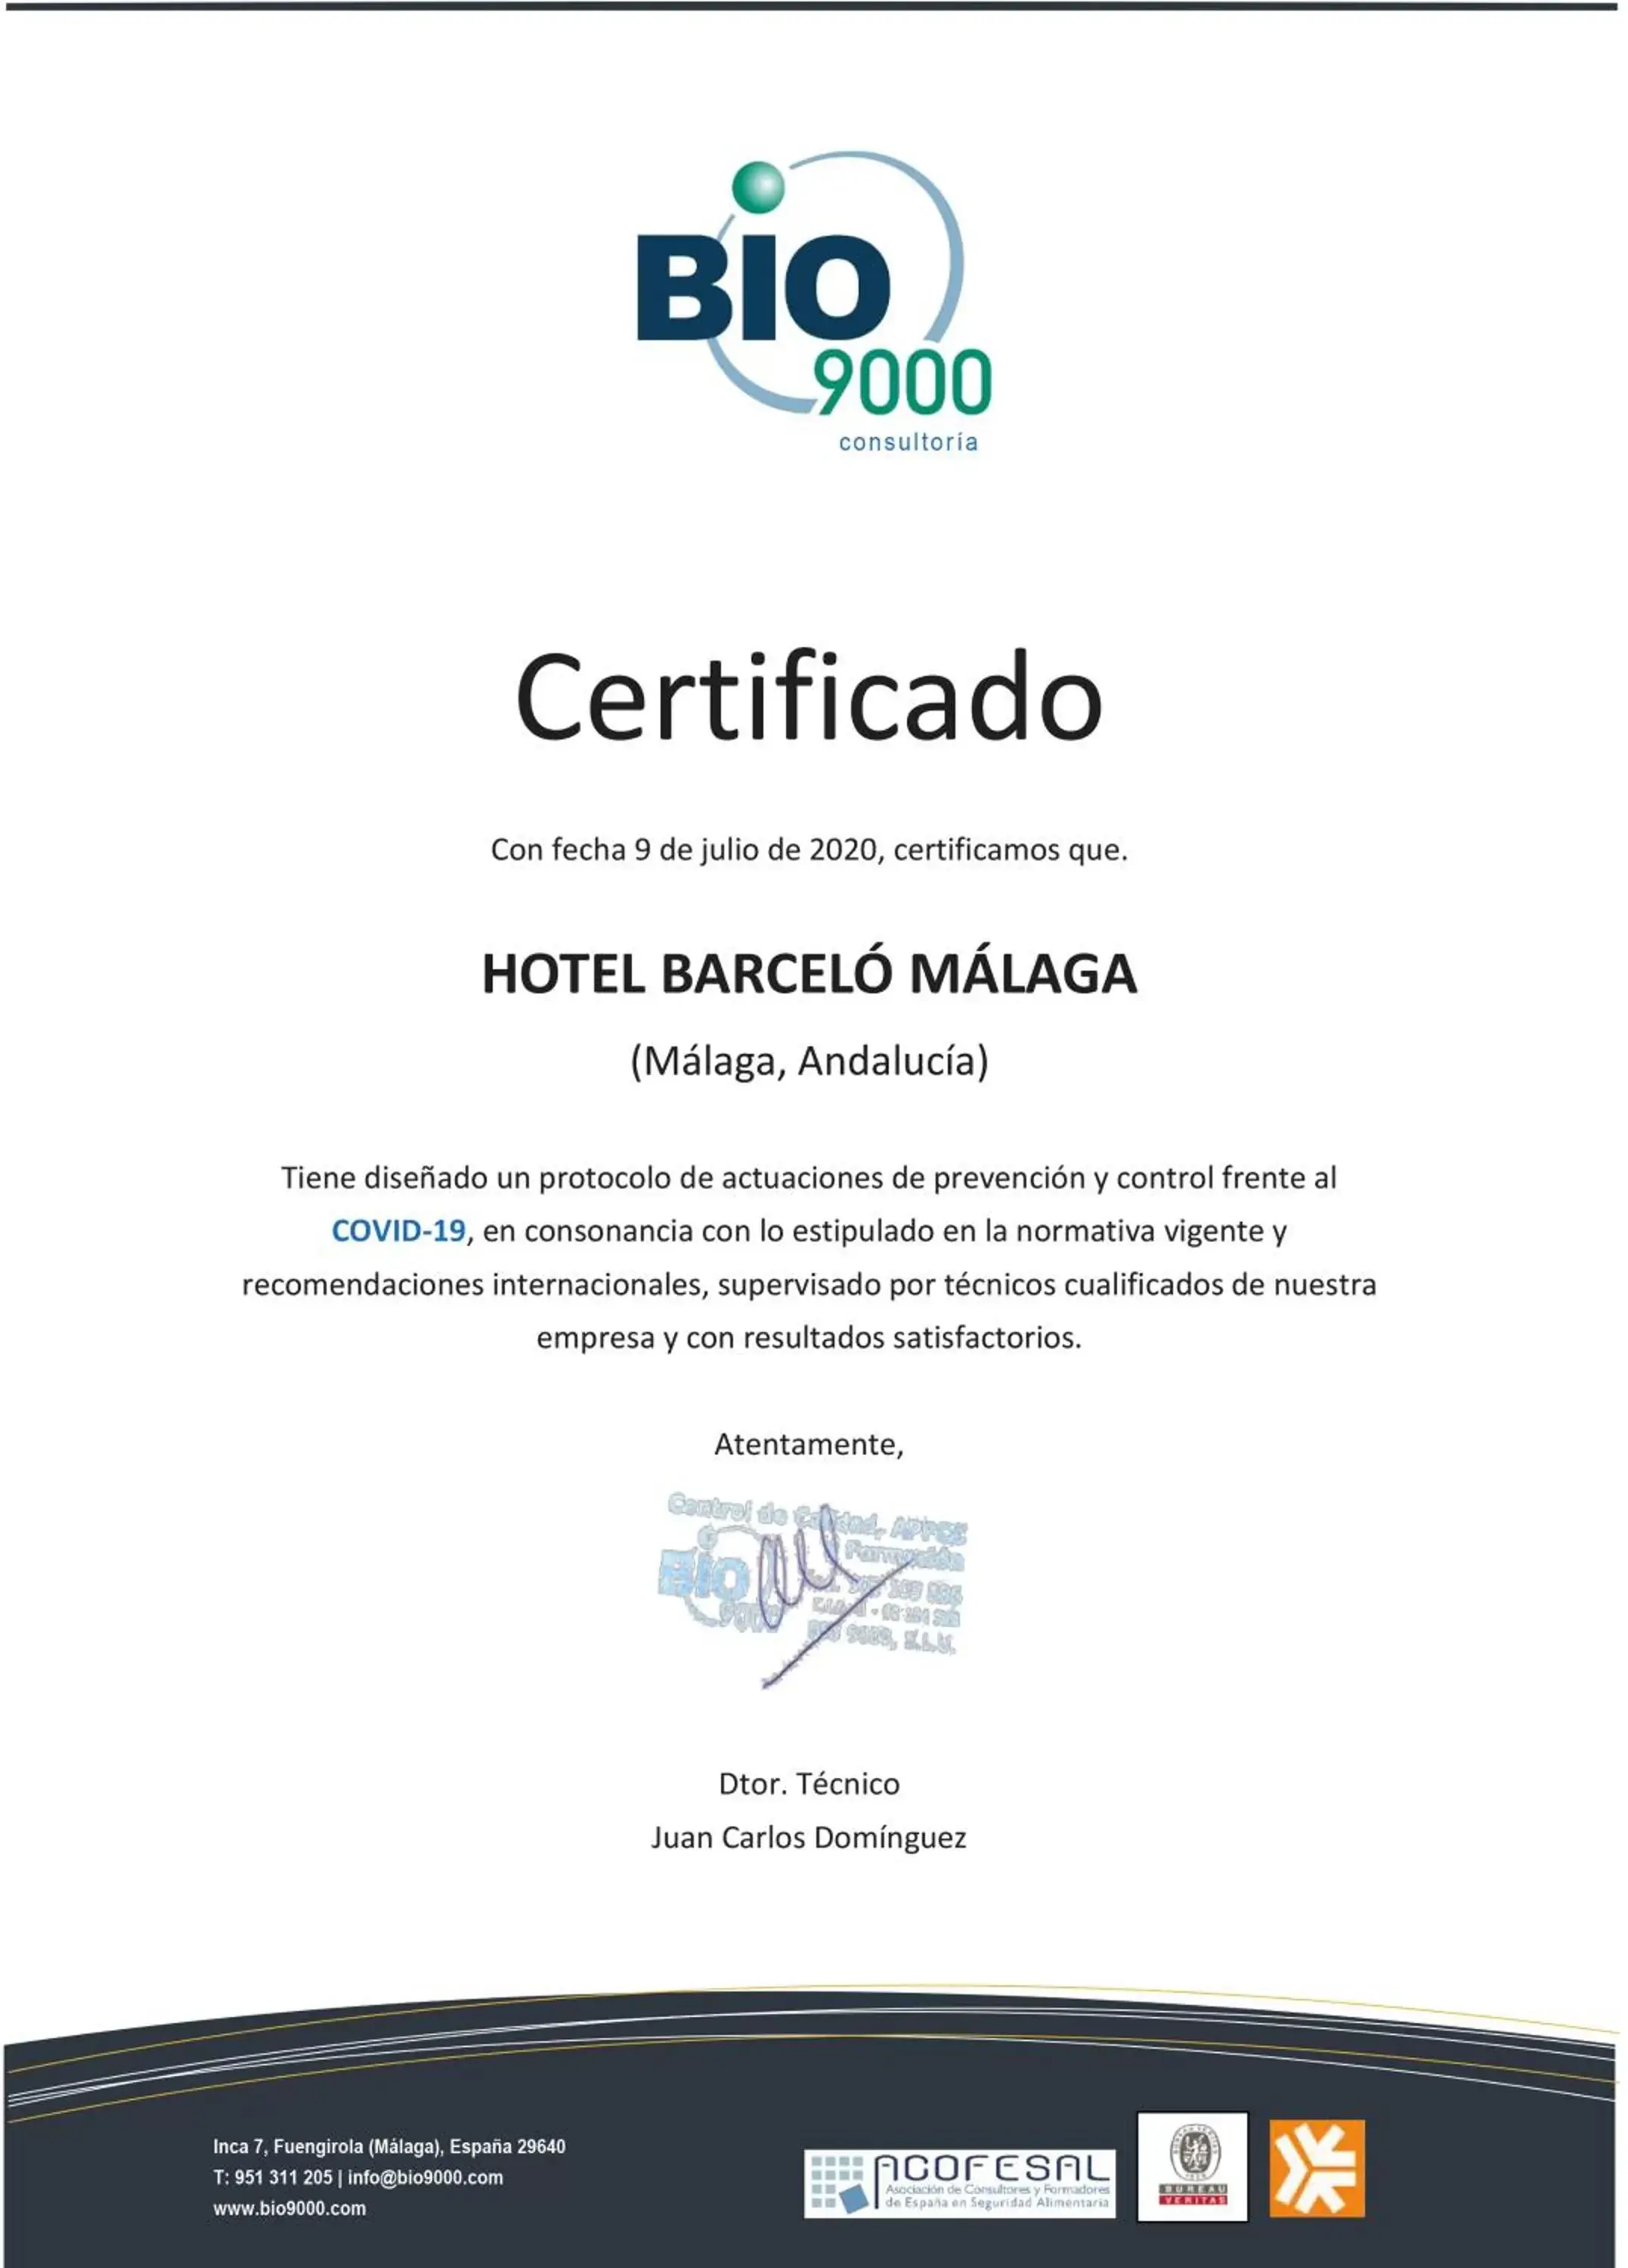 Certificate/Award in Barceló Malaga